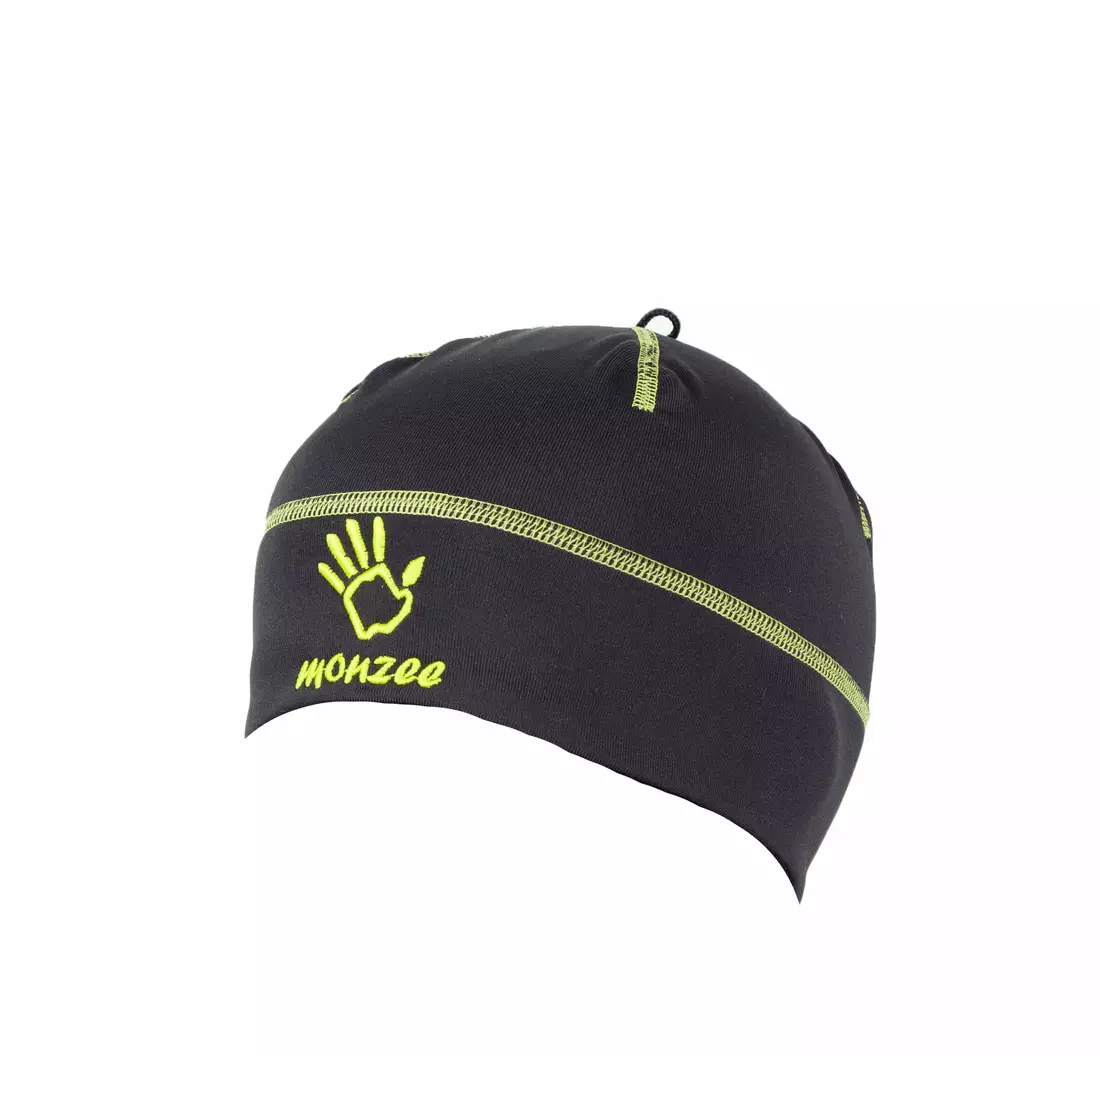 MONZEE - șapcă sport 14/01 C. negru și verde